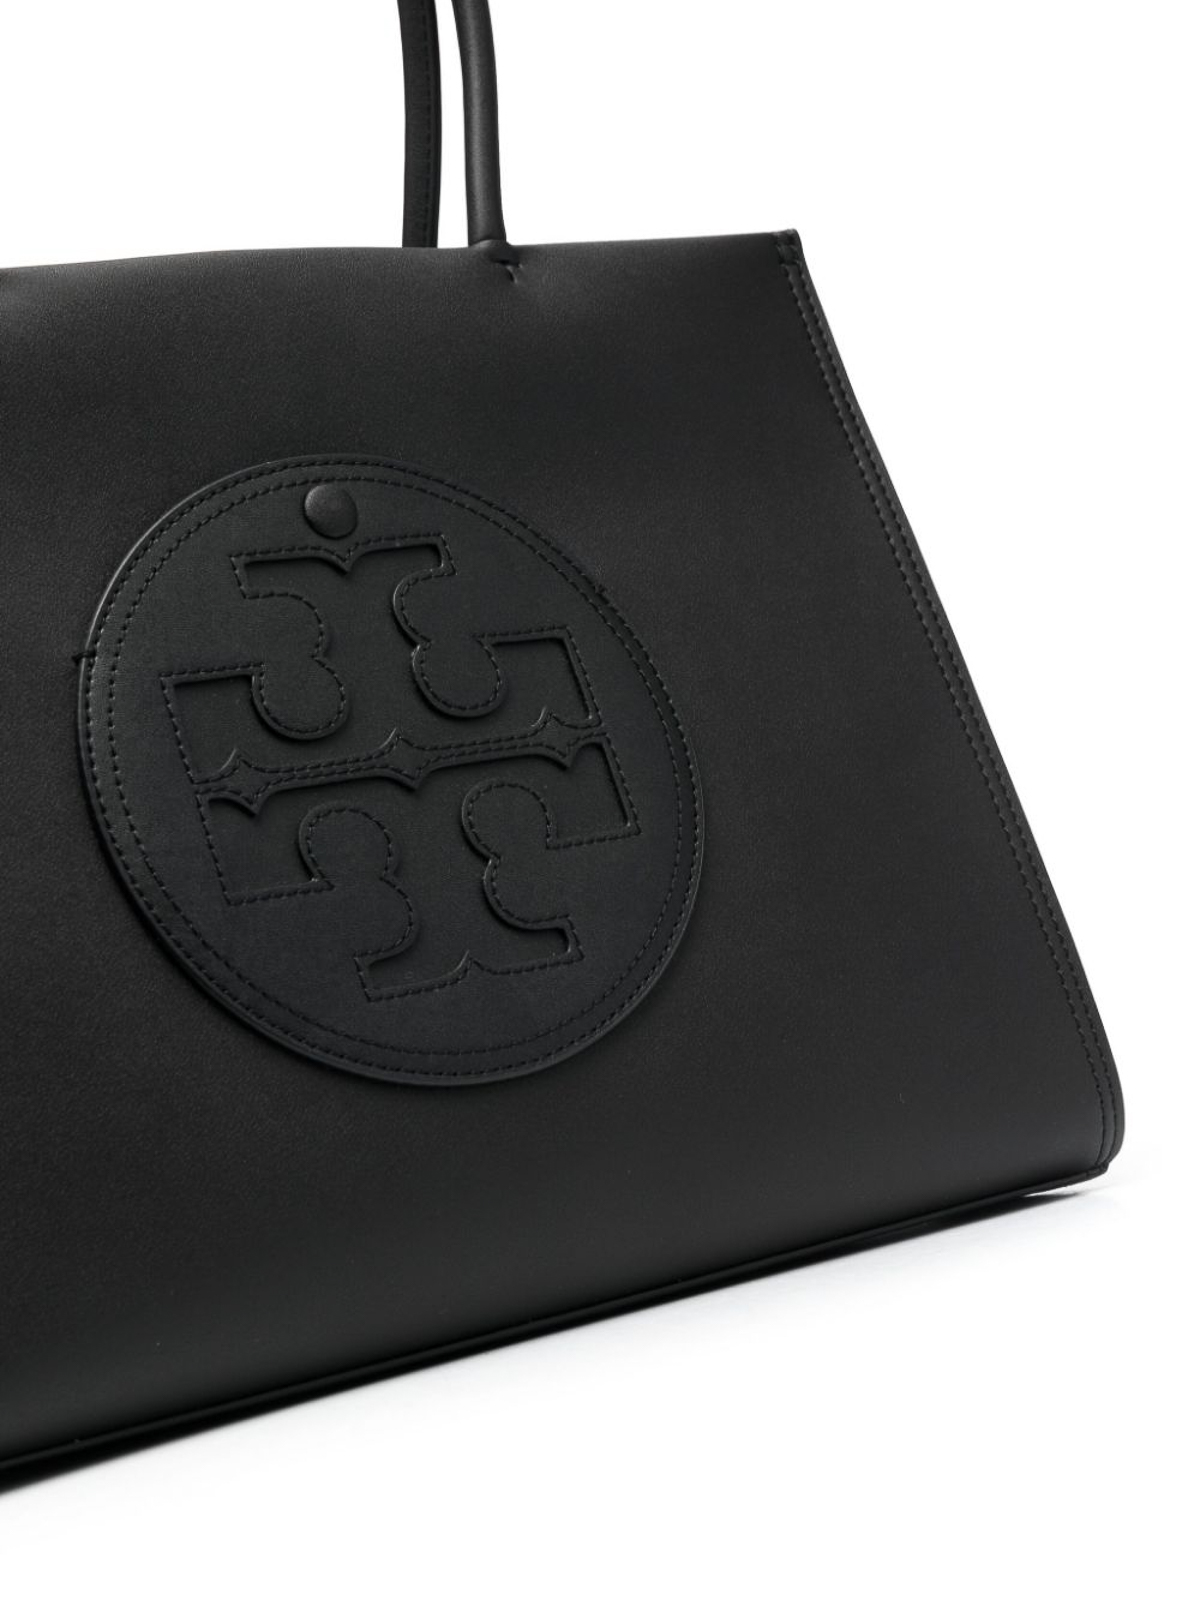 Totes bags Tory Burch - Ella tote bag in black leather - 145612001